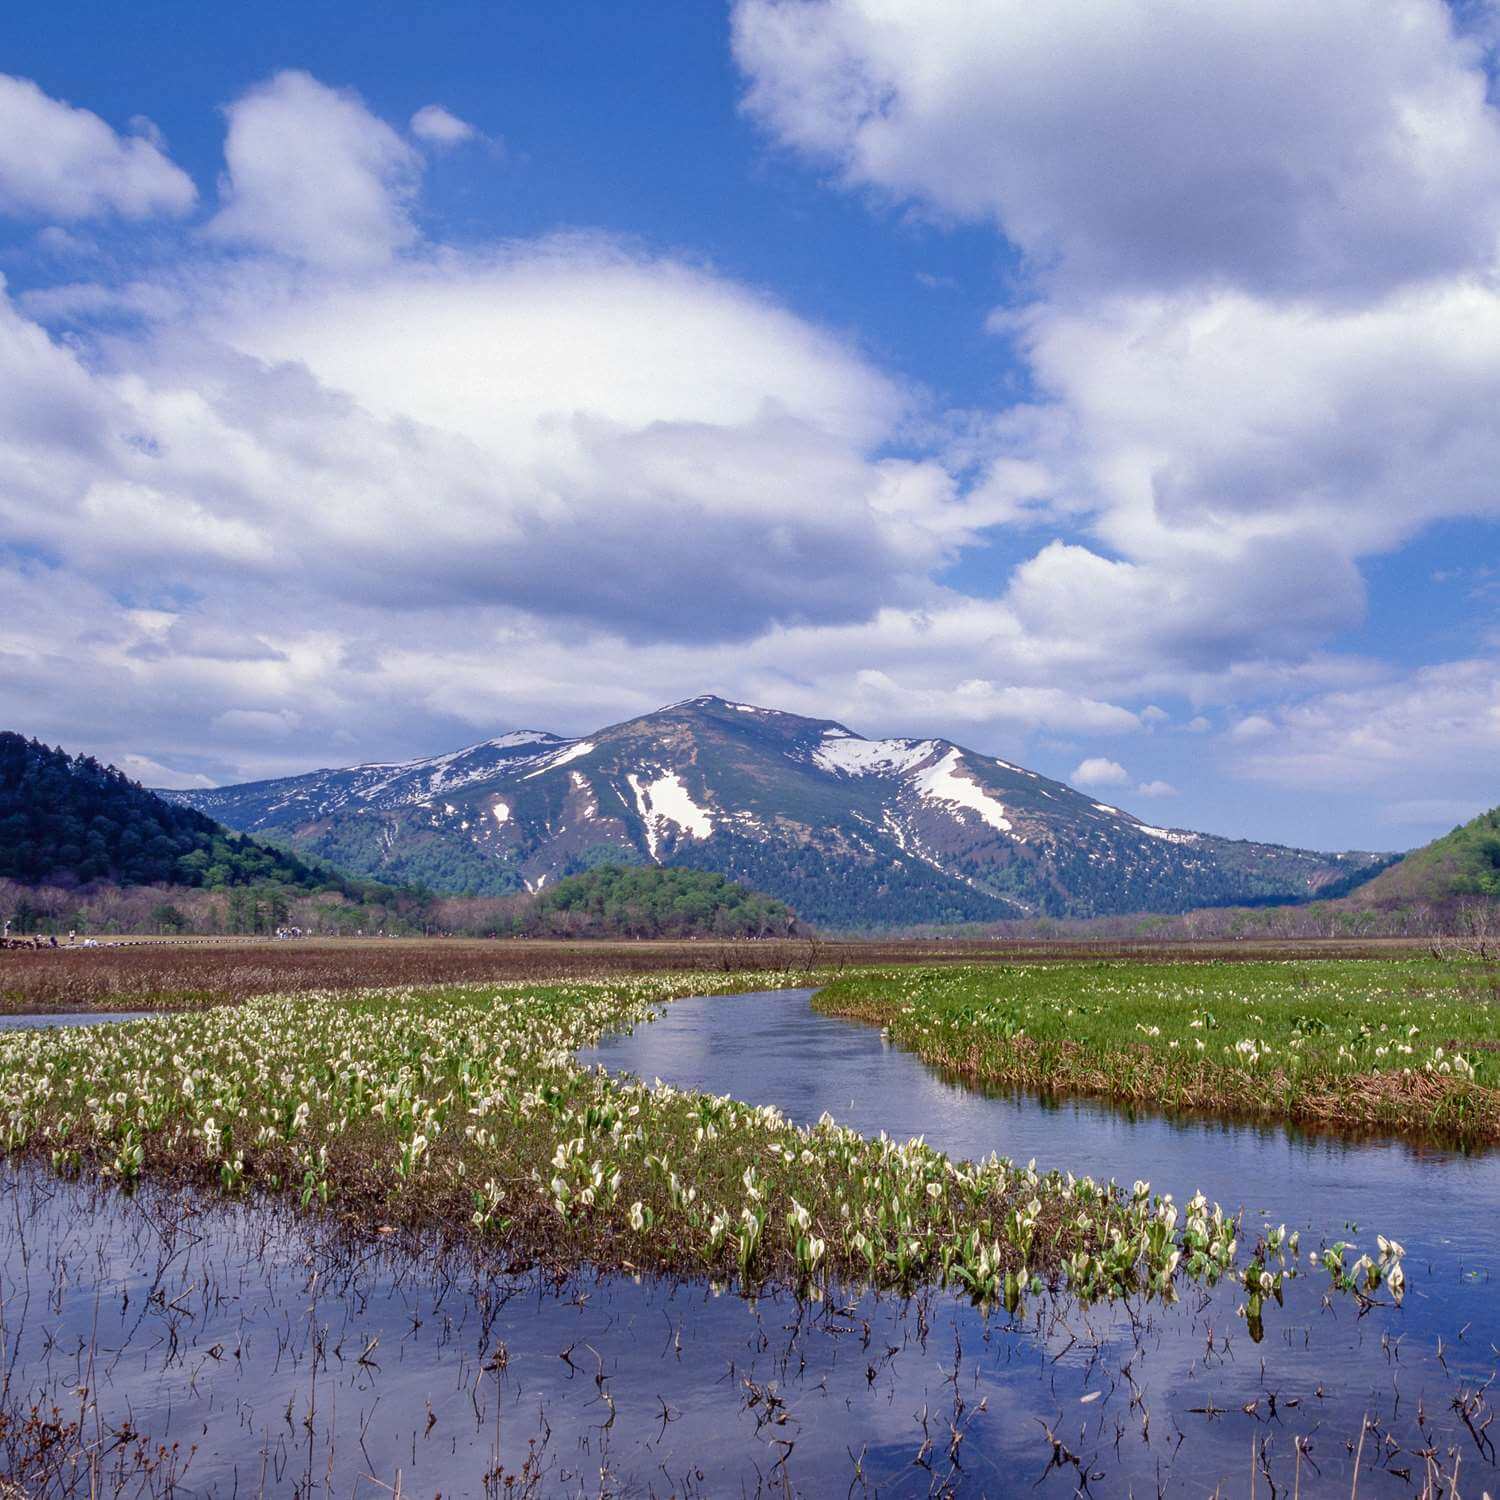 Oze, which spans Gunma, Fukushima and Niigata prefectures = Shutterstock